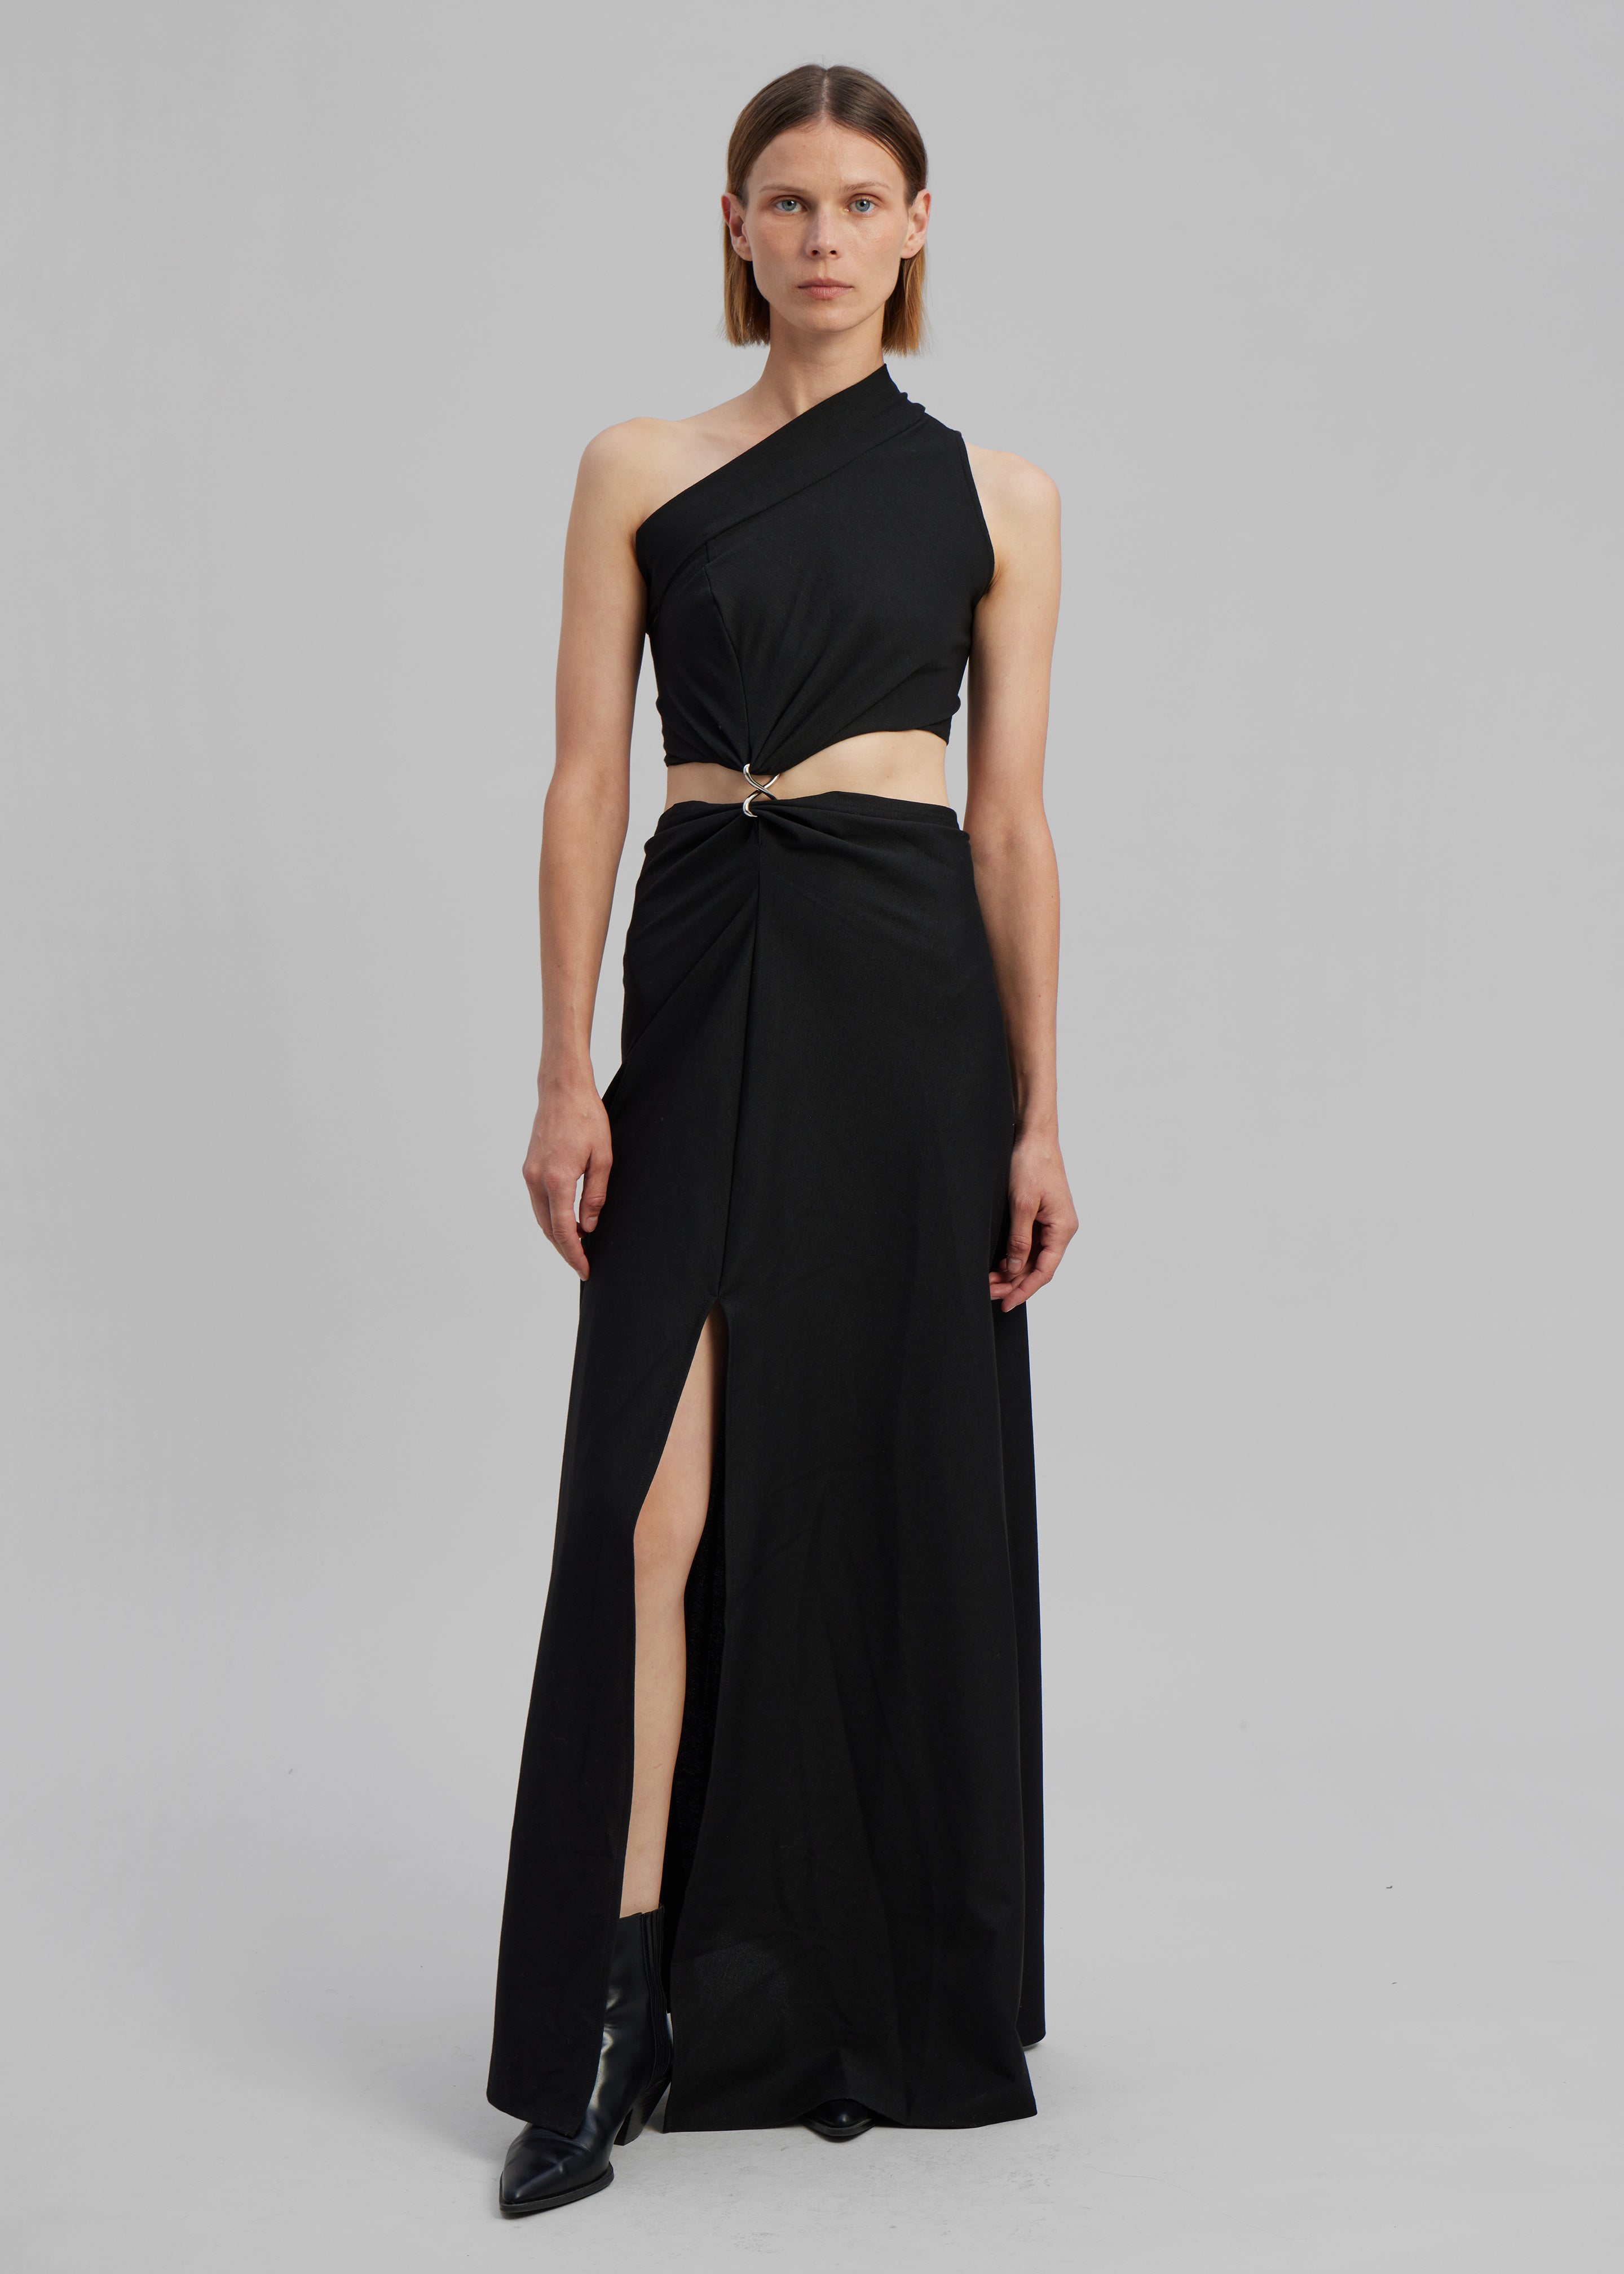 Sid Neigum Knit One-Shoulder Strap Dress W Hardware Detail - Black